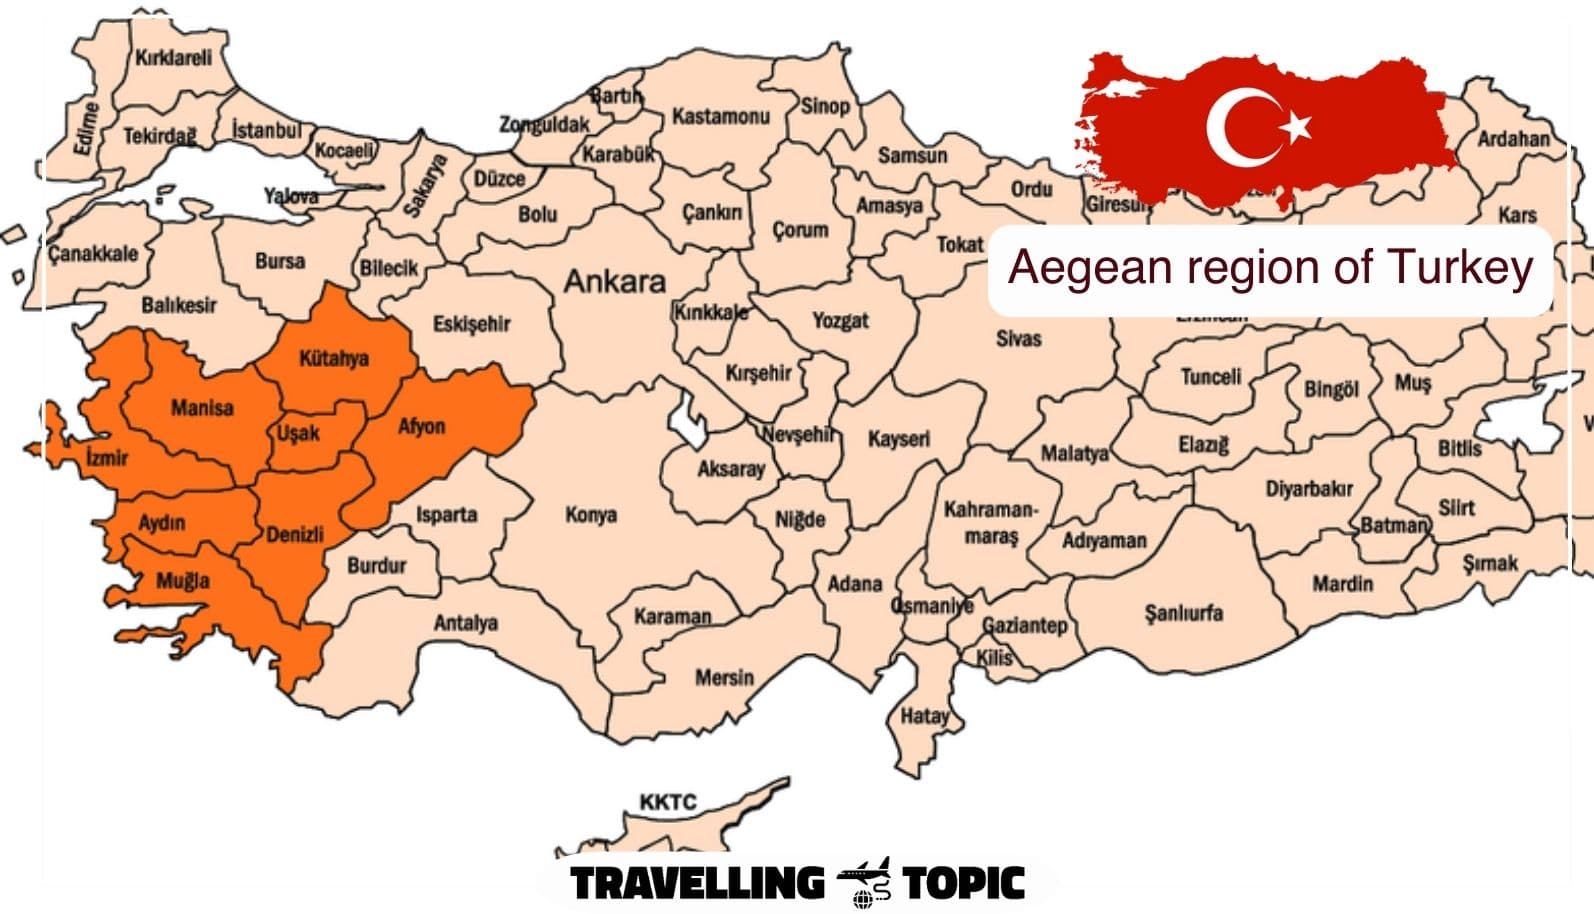 Aegean region of Turkey